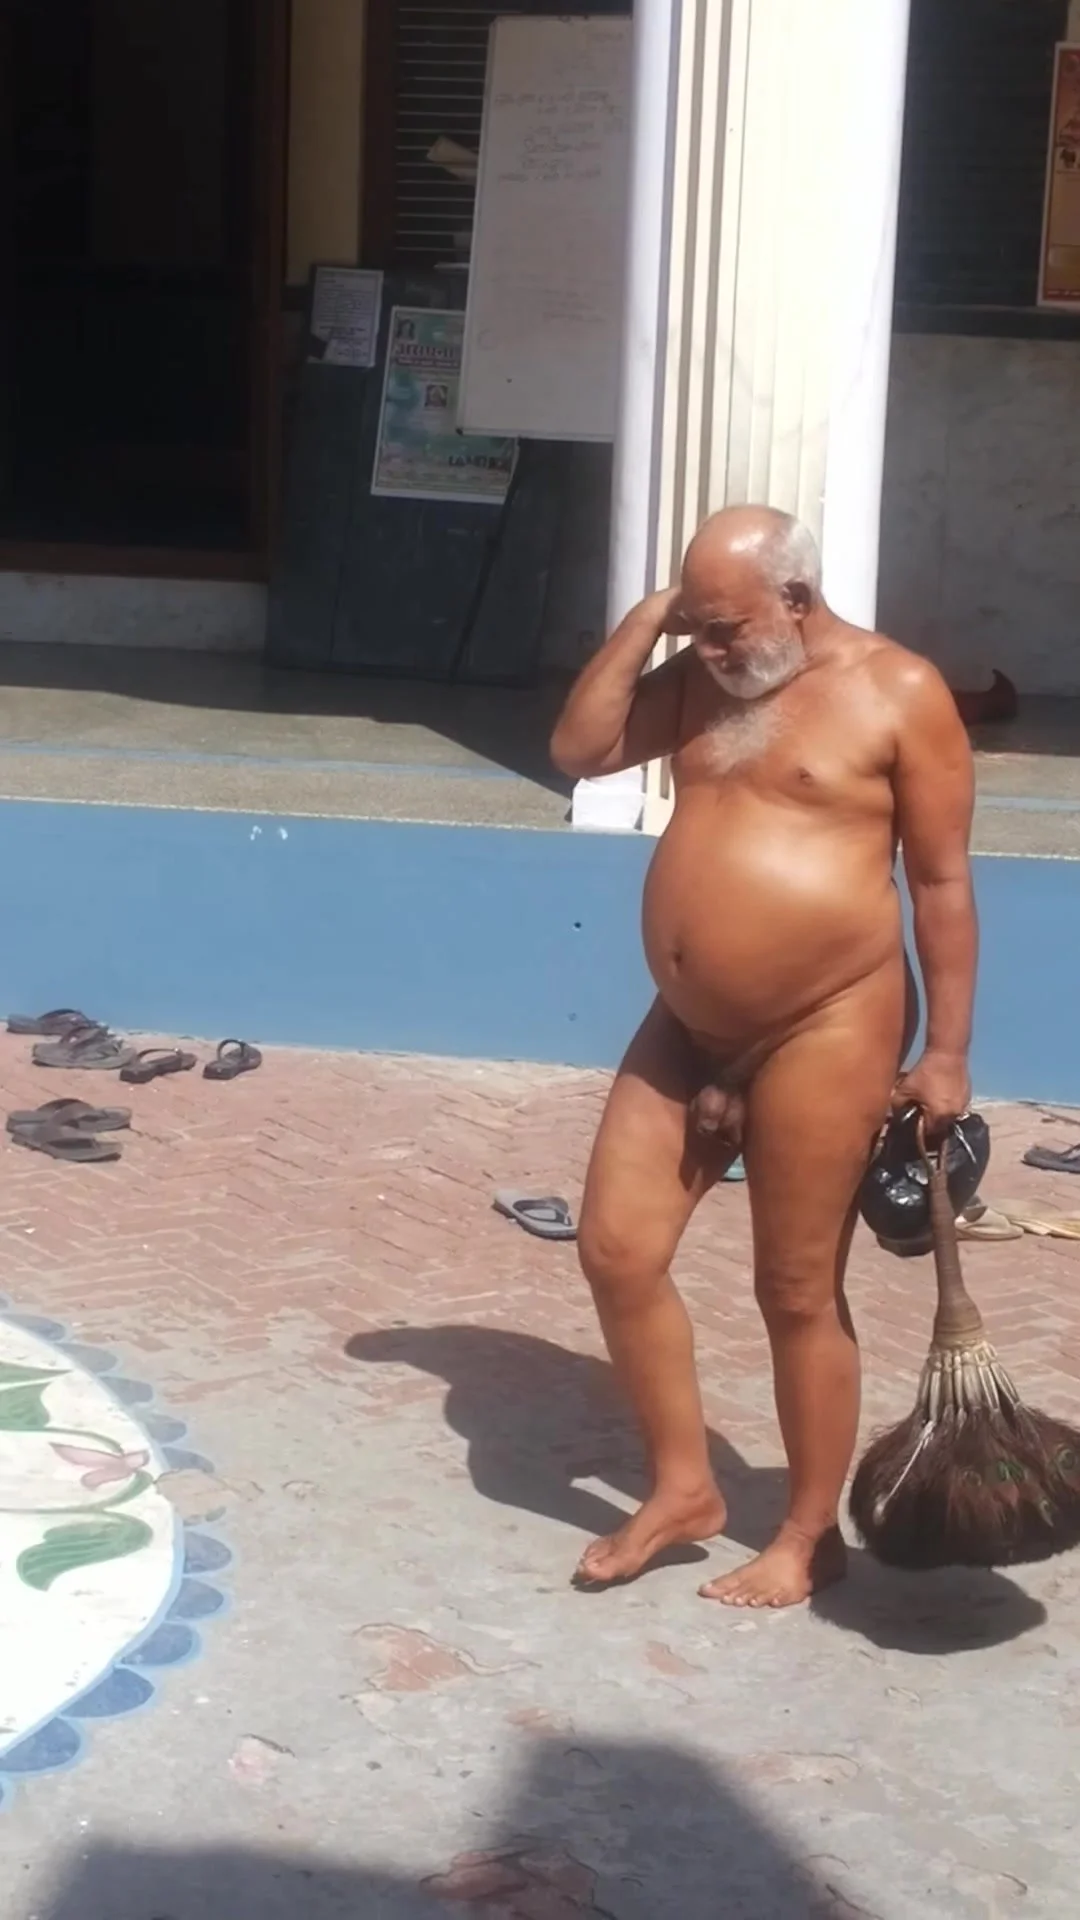 Nagaland Naked Video Come - Indian Naga baba naked on the street - ThisVid.com